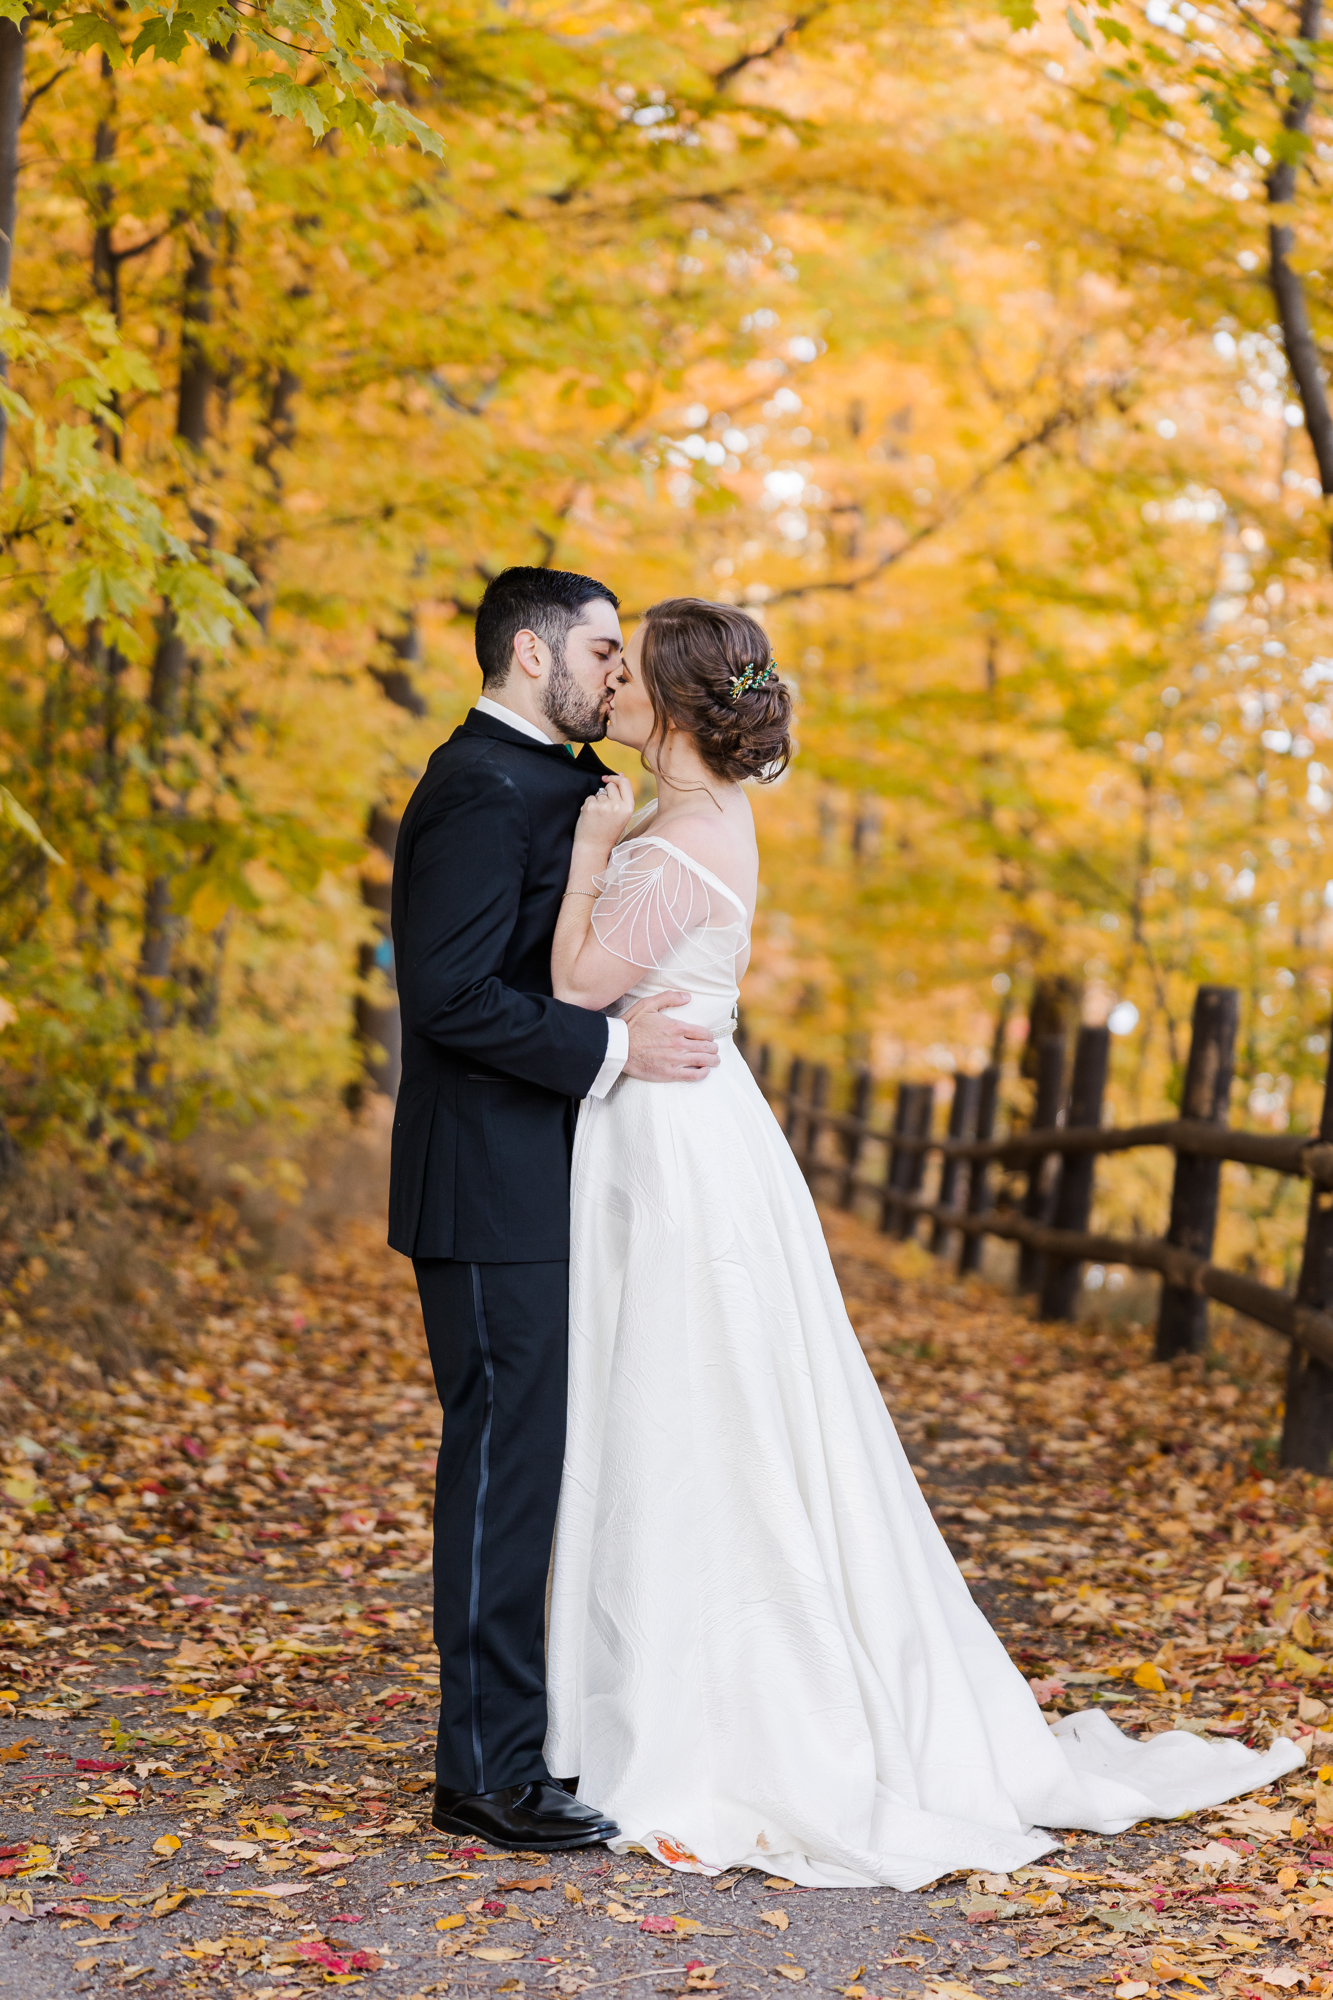 Striking Gate House Wedding in Fall